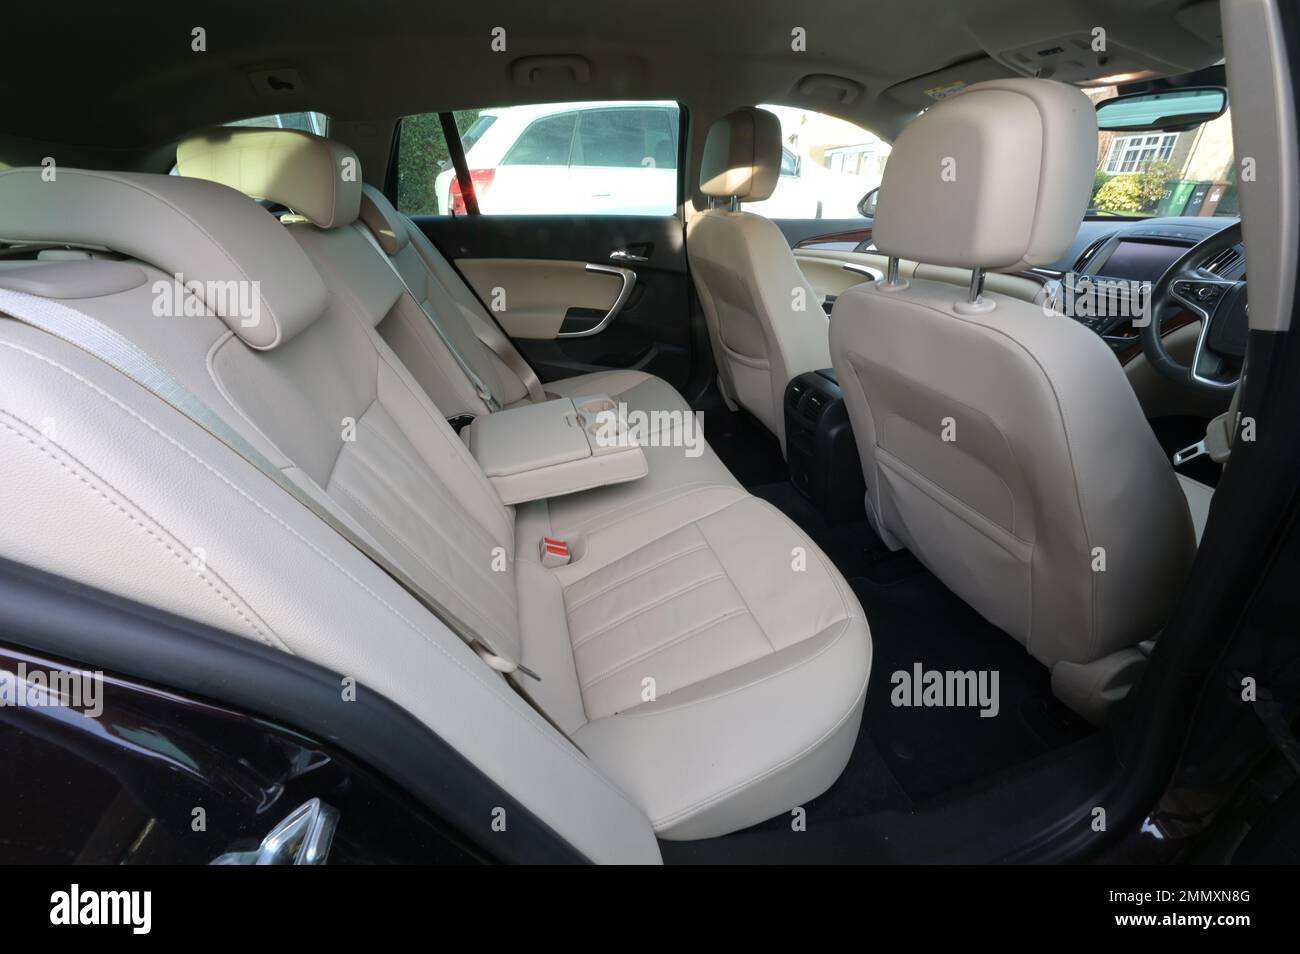 Luxury leather interior of a high speed sedan. Stock Photo